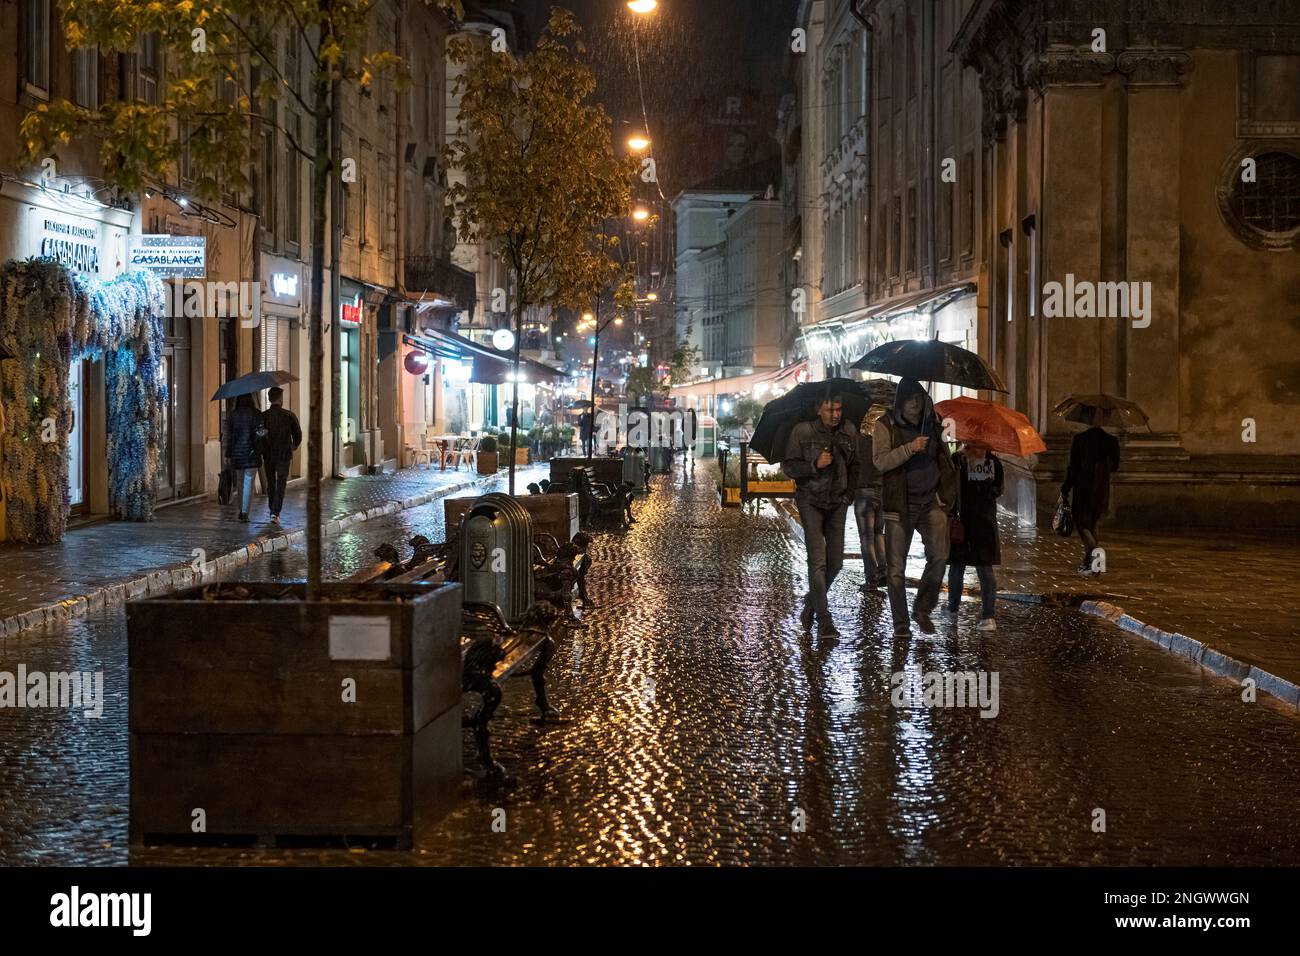 2020-09-29 Lviv, Ukraine. Rainy night in old city center. Pedestrians with umbrellas on wet cobblestone streets Stock Photo